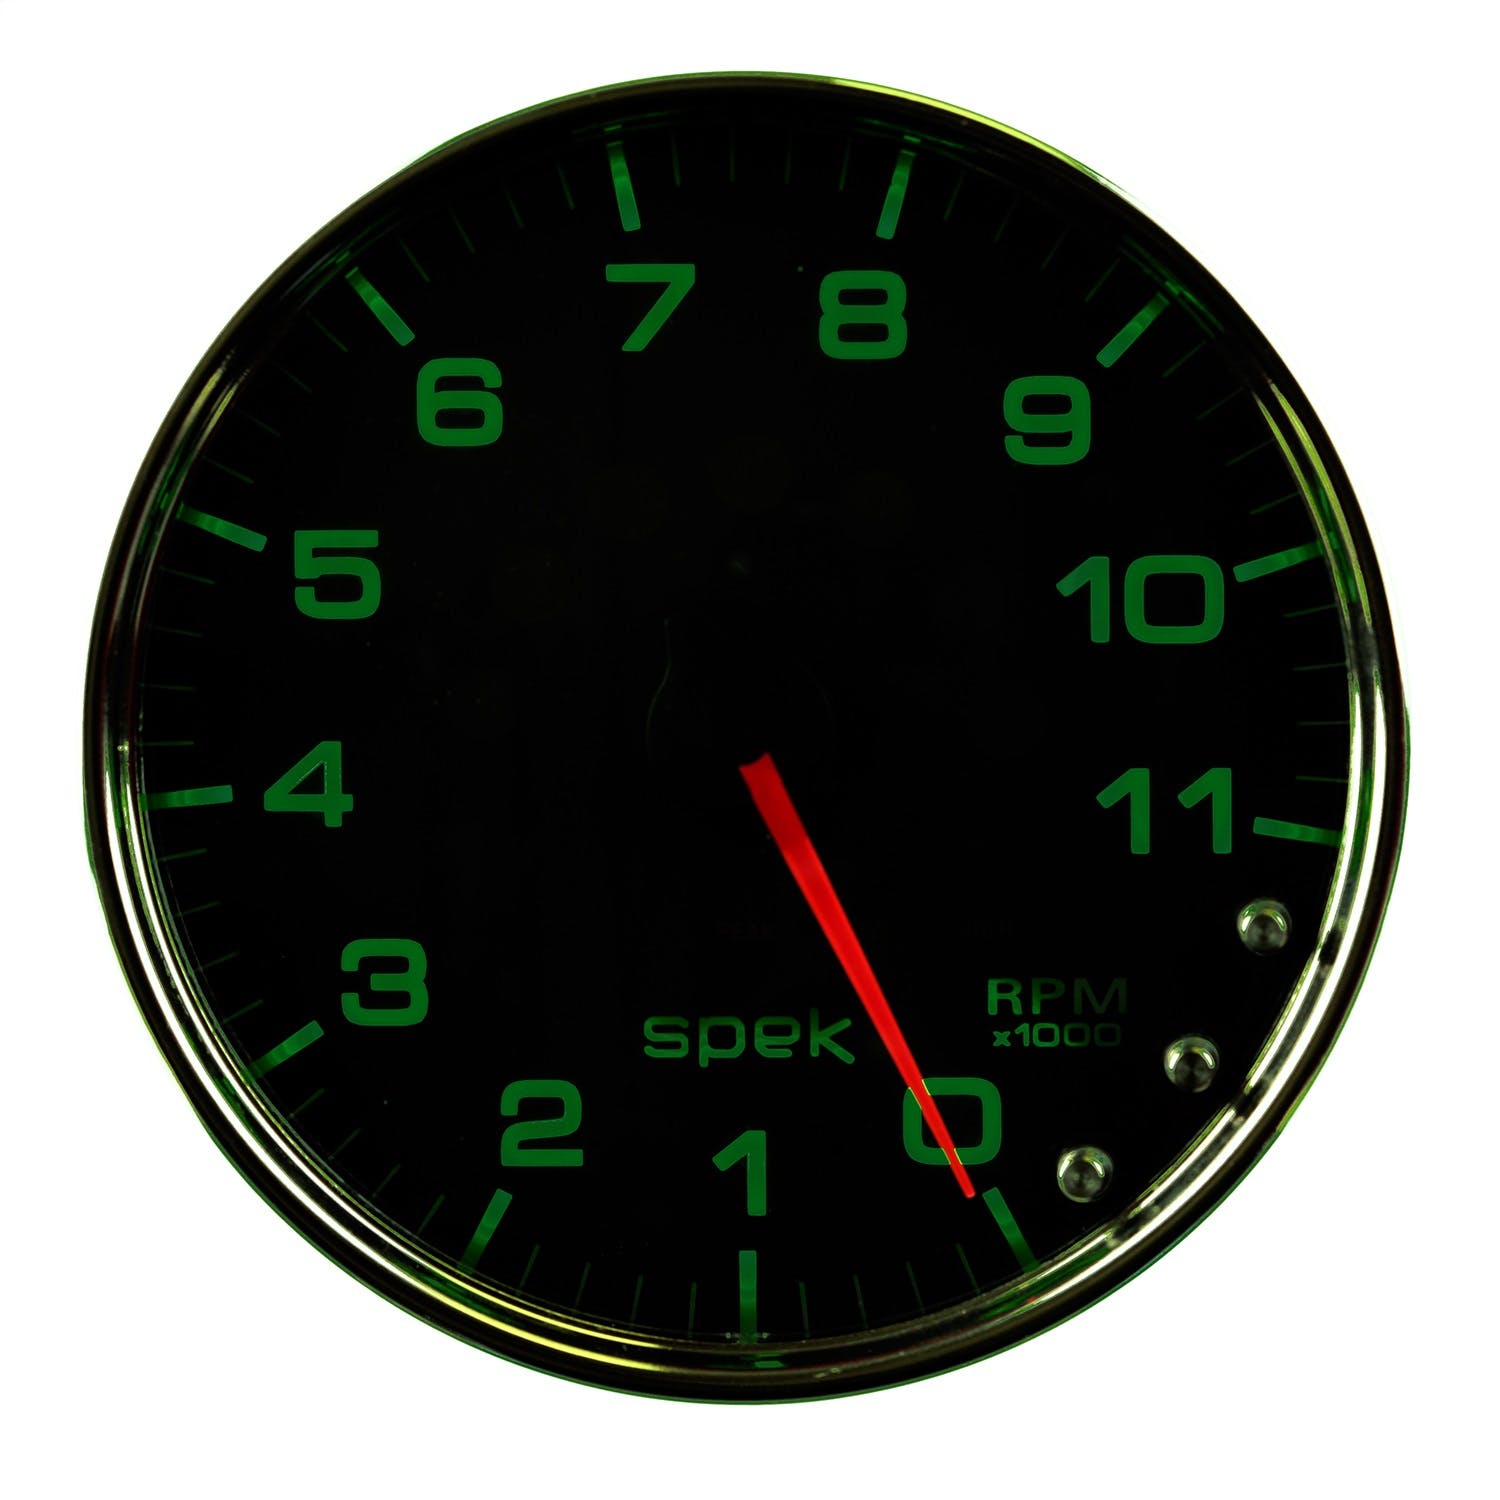 AutoMeter Products P23931 Spek Pro Tachometer Gauge, 5, 11K RPM, with Shift Light Black/Chrome